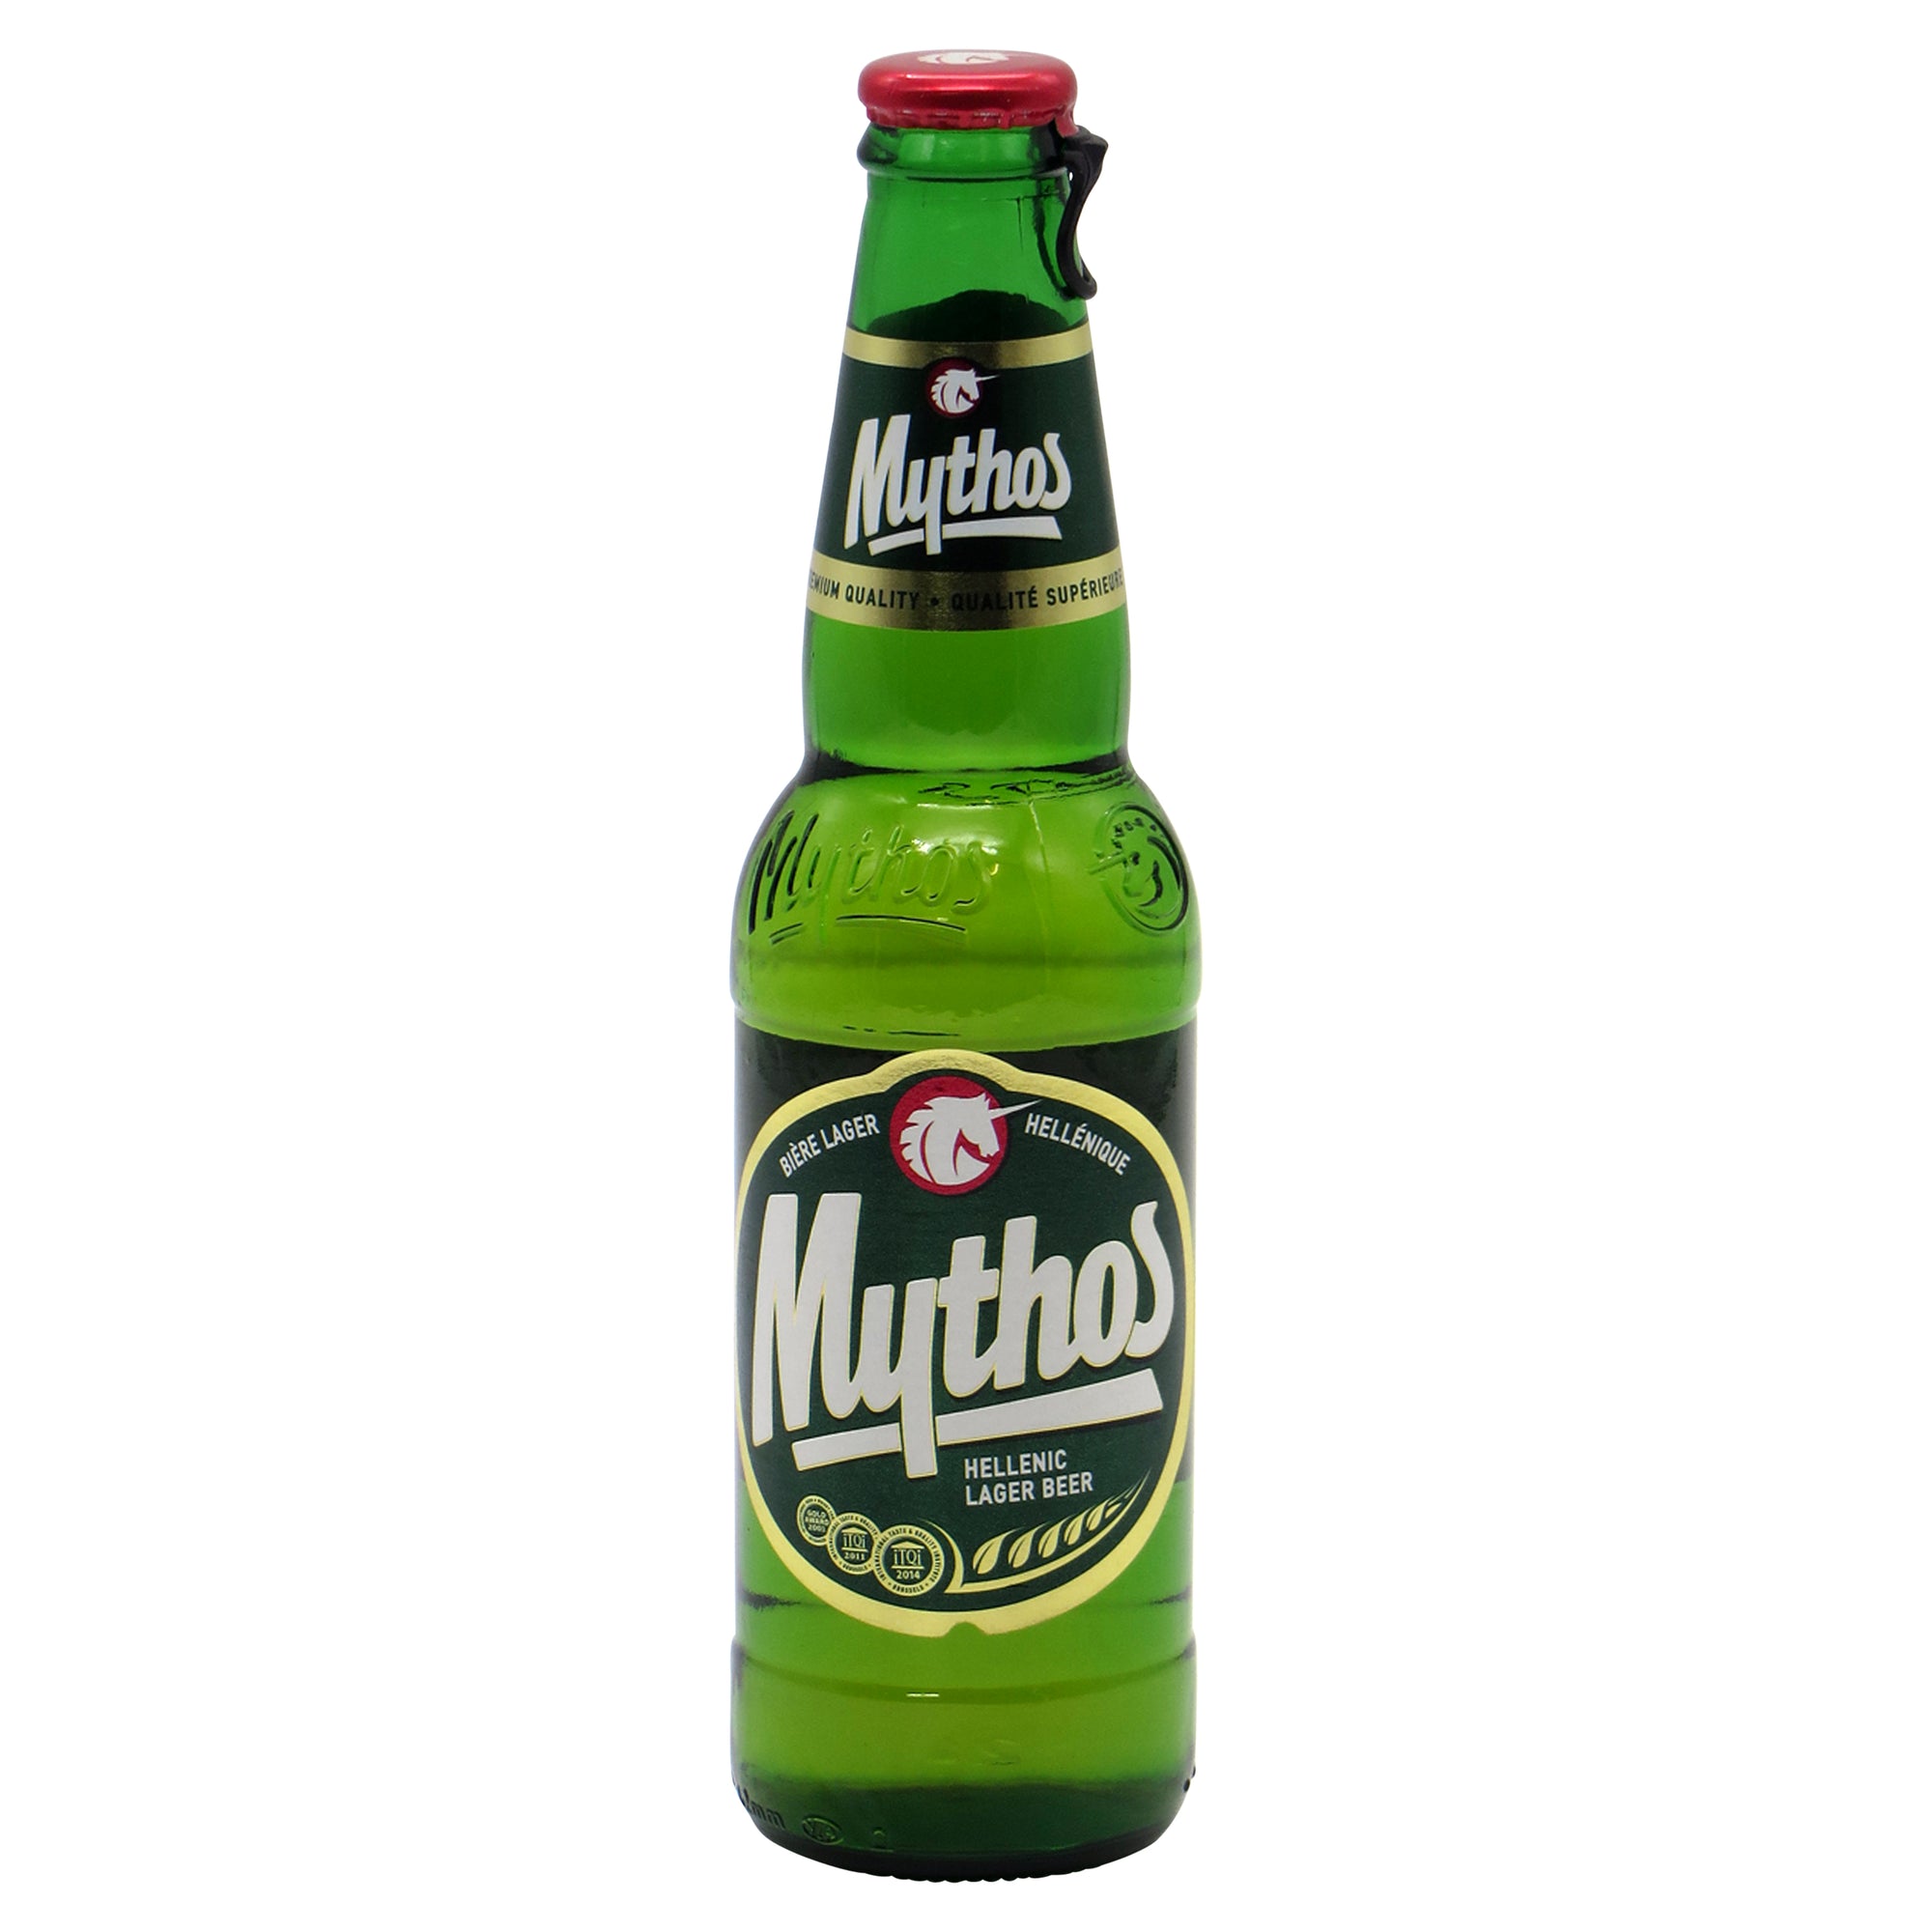 Mythos Beer 330ml bottles 6 pack